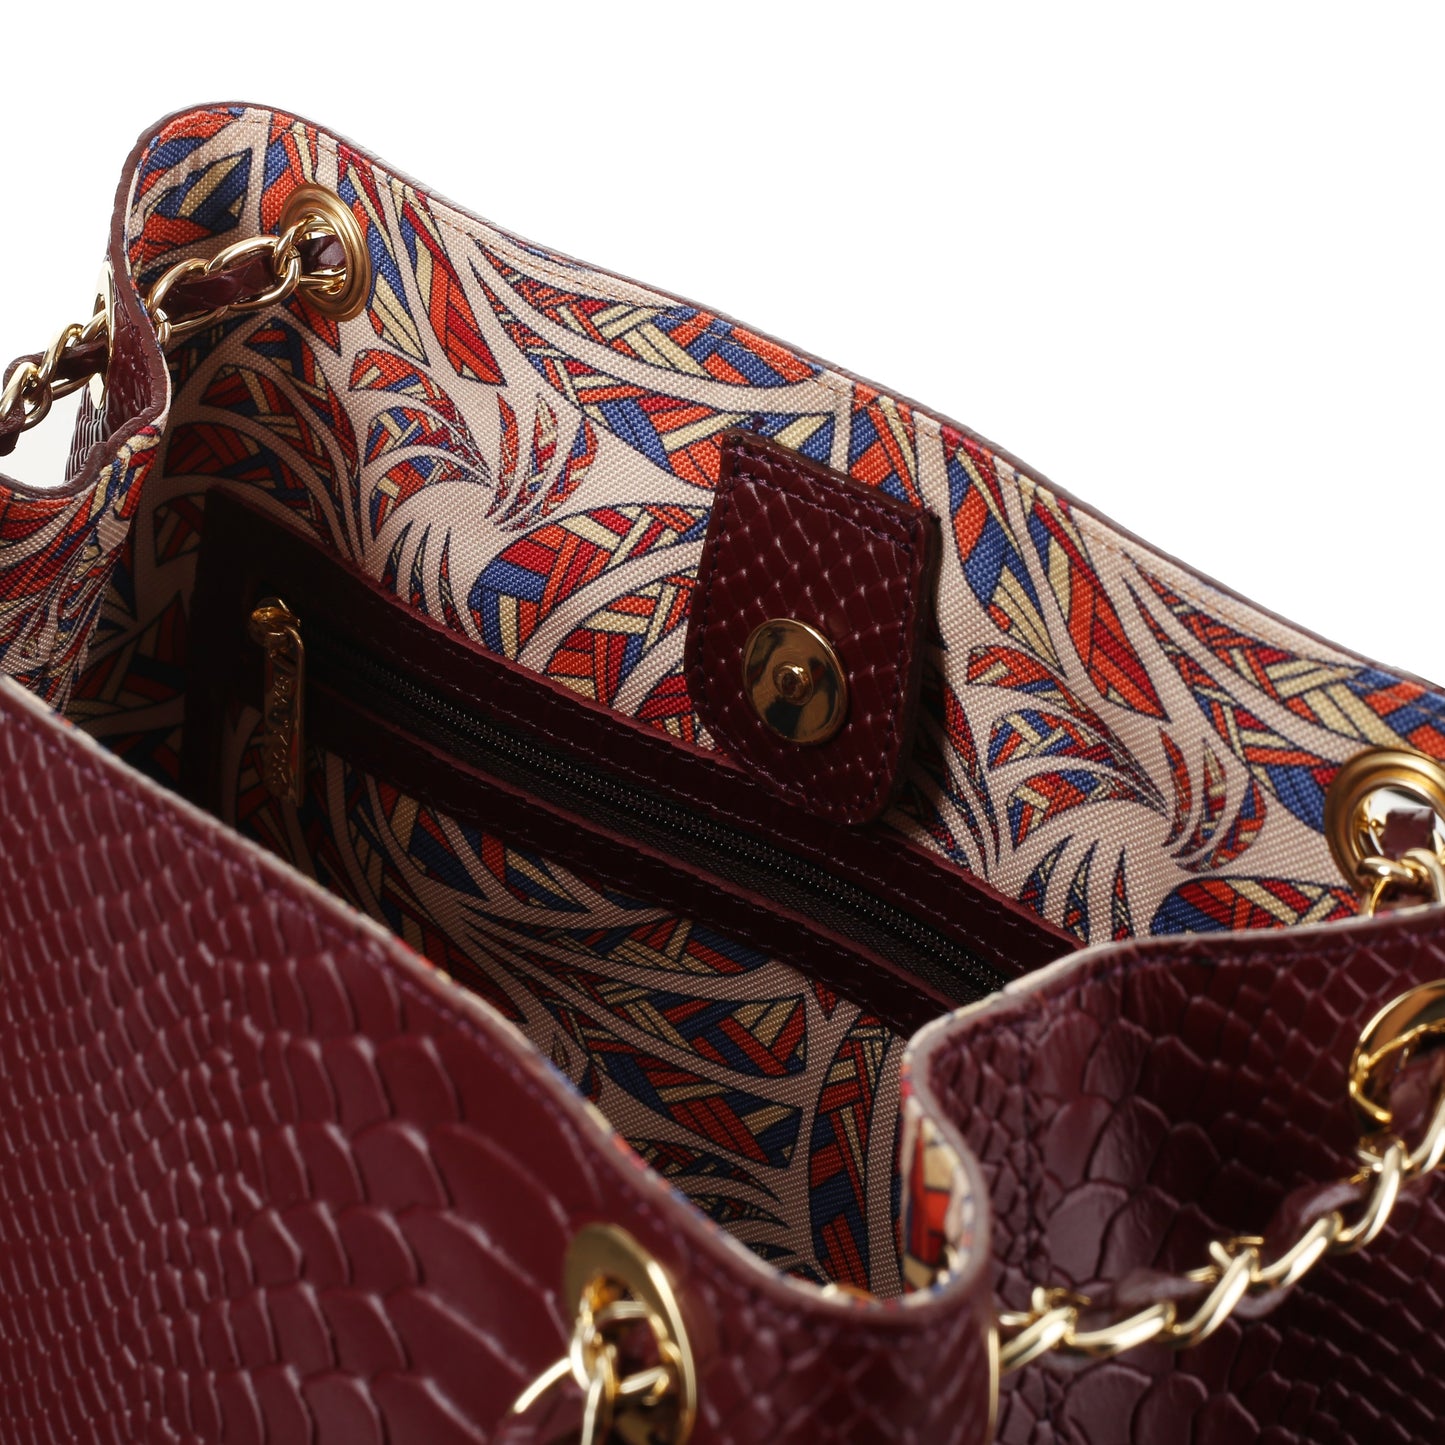 AMELIA CLARET women's leather handbag